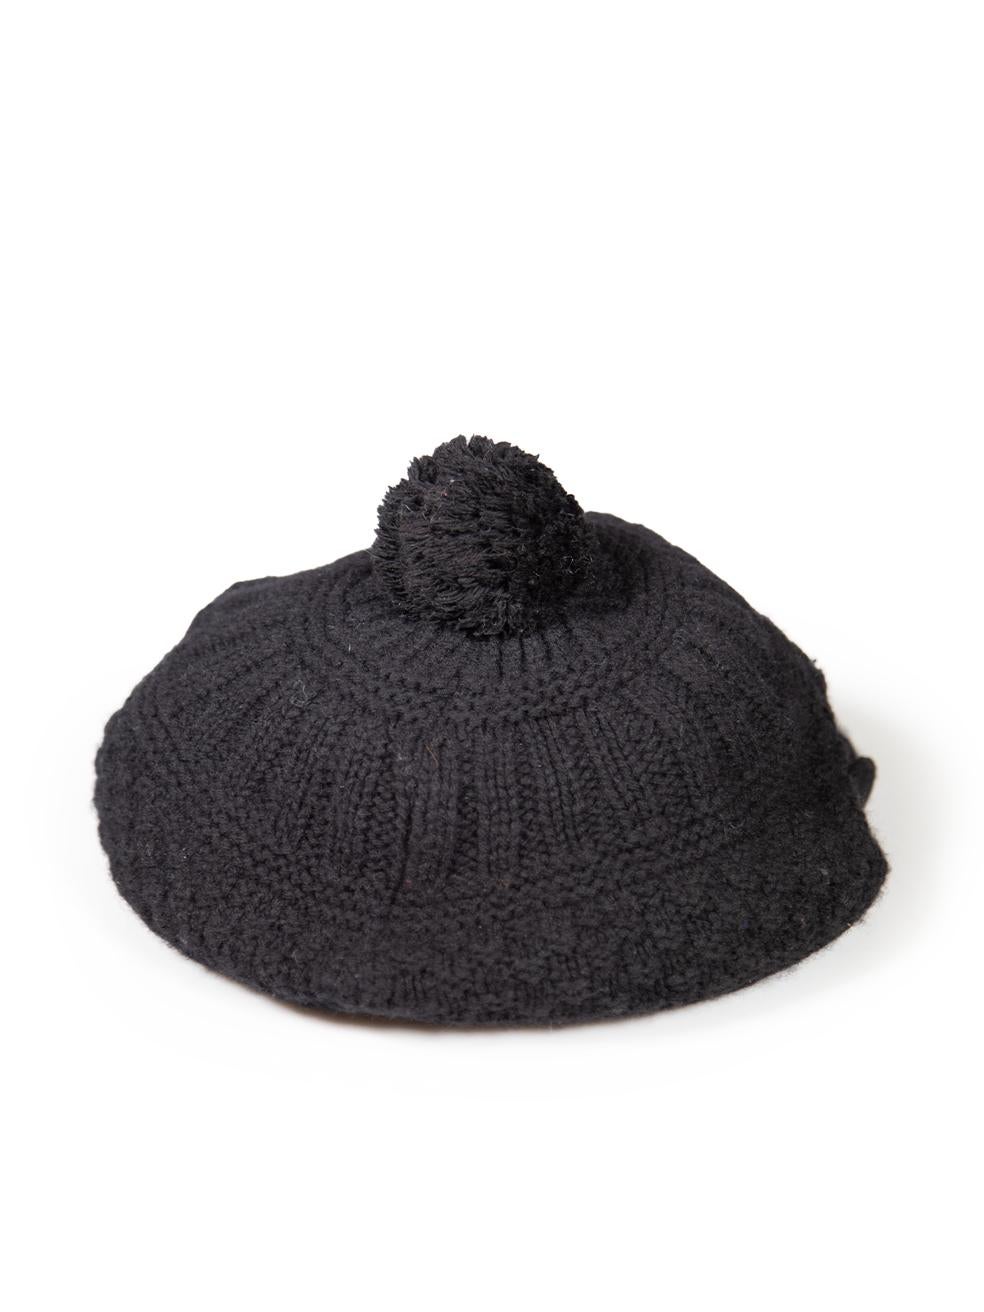 Yohji Yamamoto Black Wool Pom Pom Knit Hat In Good Condition For Sale In London, GB